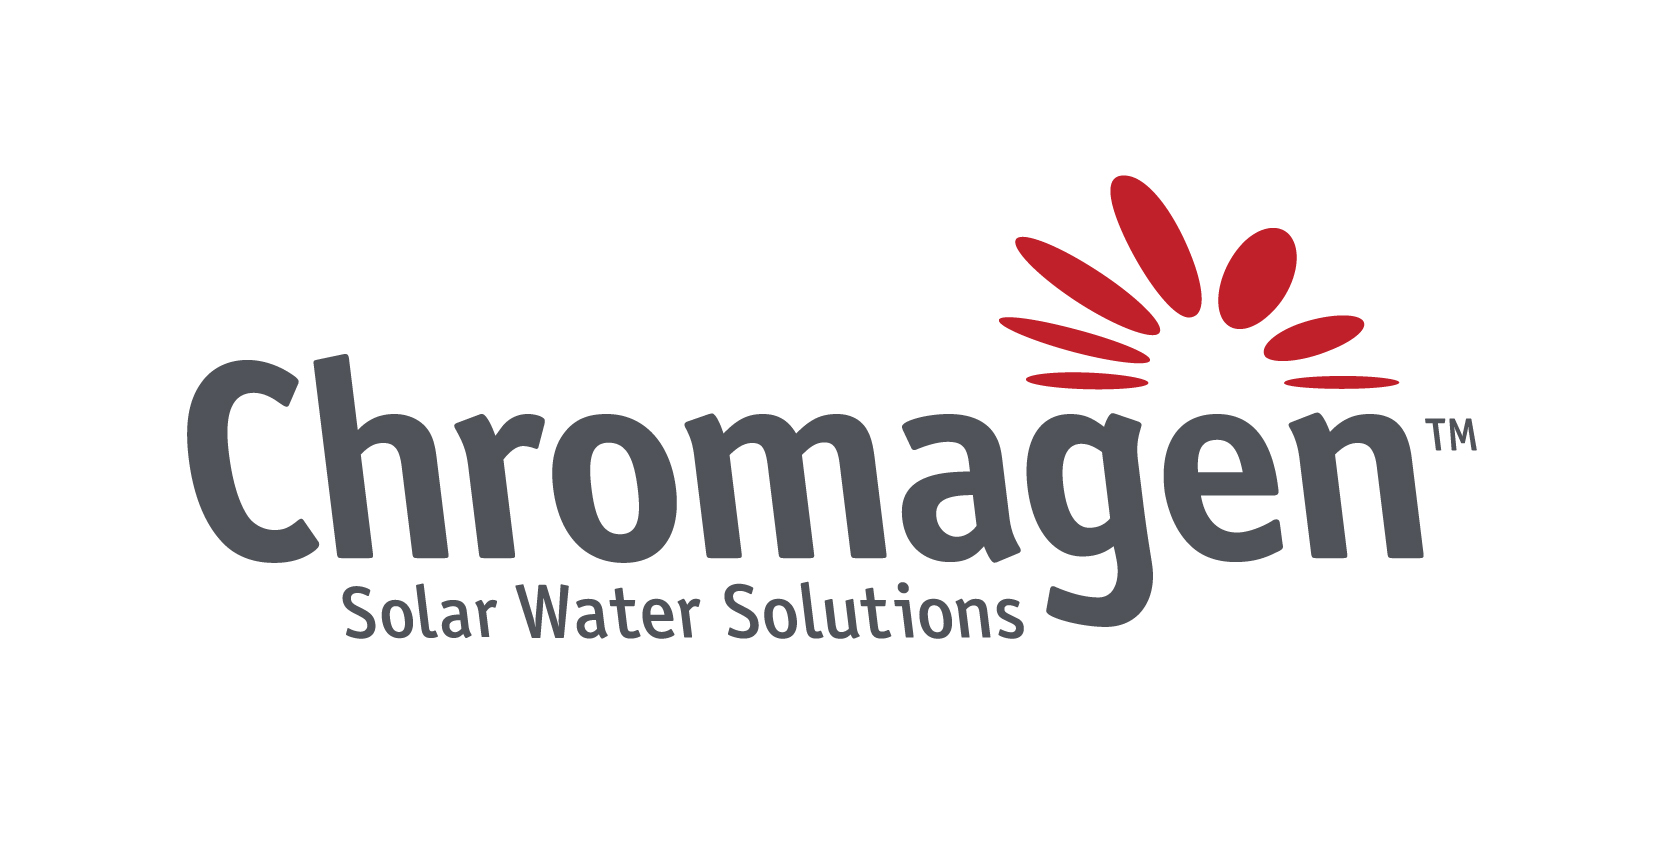 Chromagen ACS Ltd